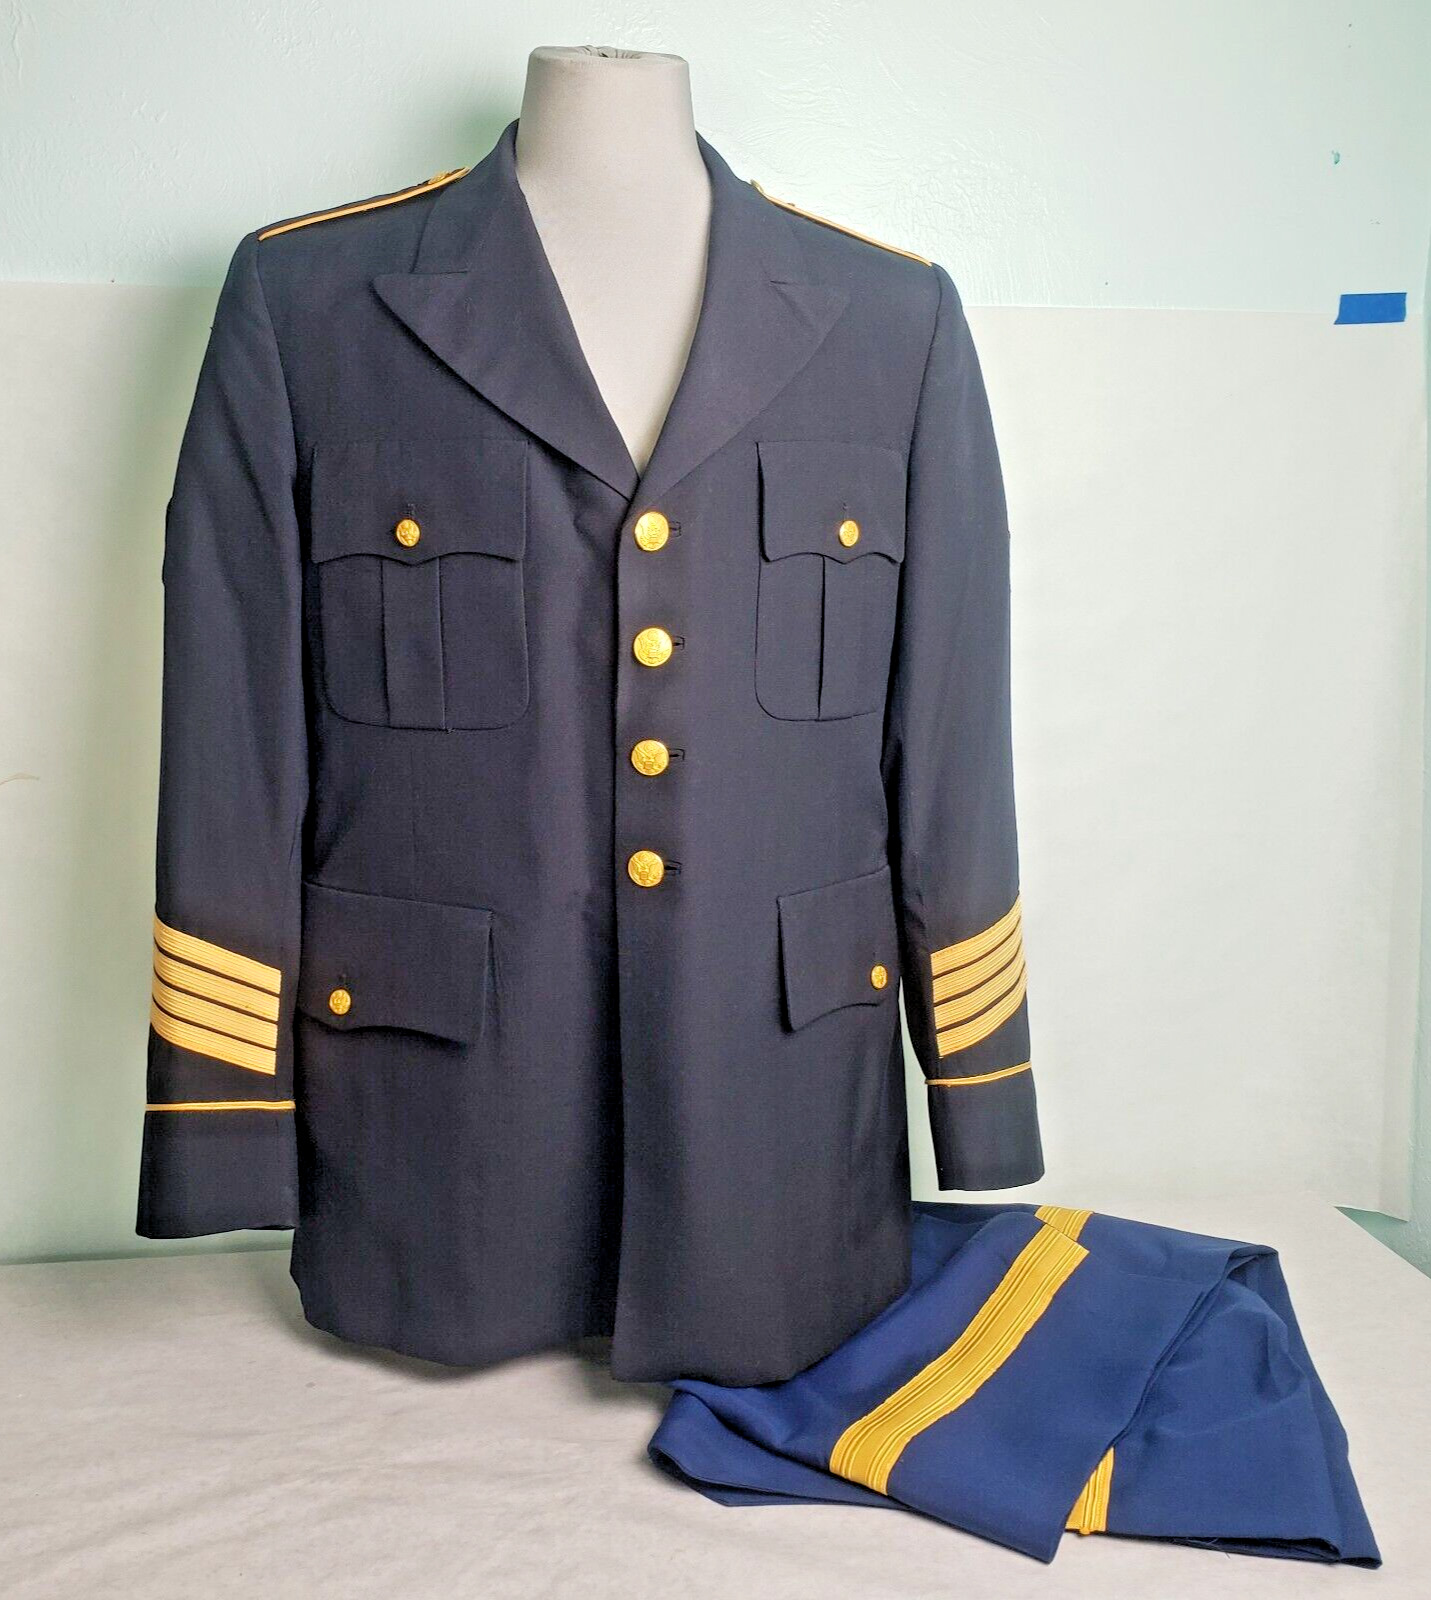 US Army Men’s Military Service Dress Blue Uniform set Jacket 44R w/Pants